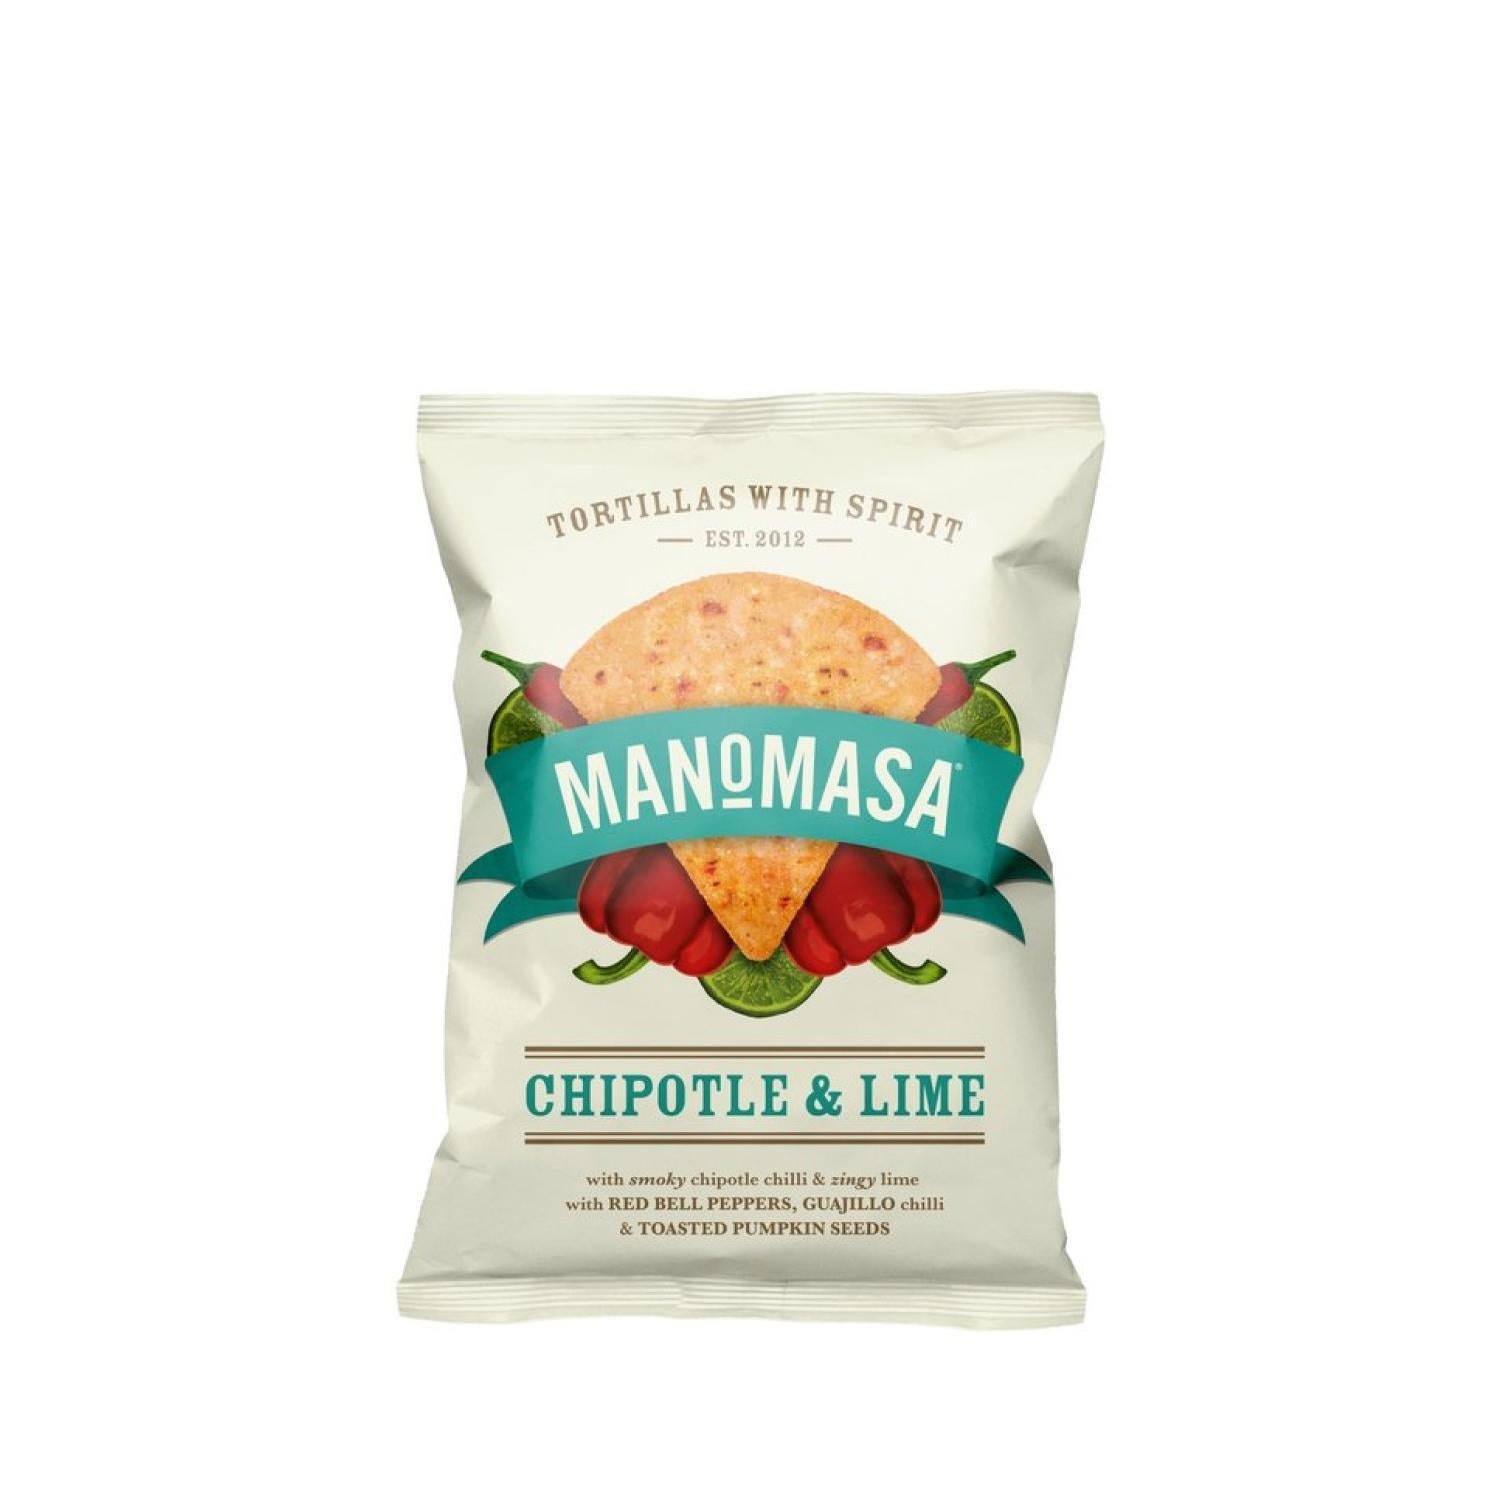 Manomasa - Chipotle & Lime